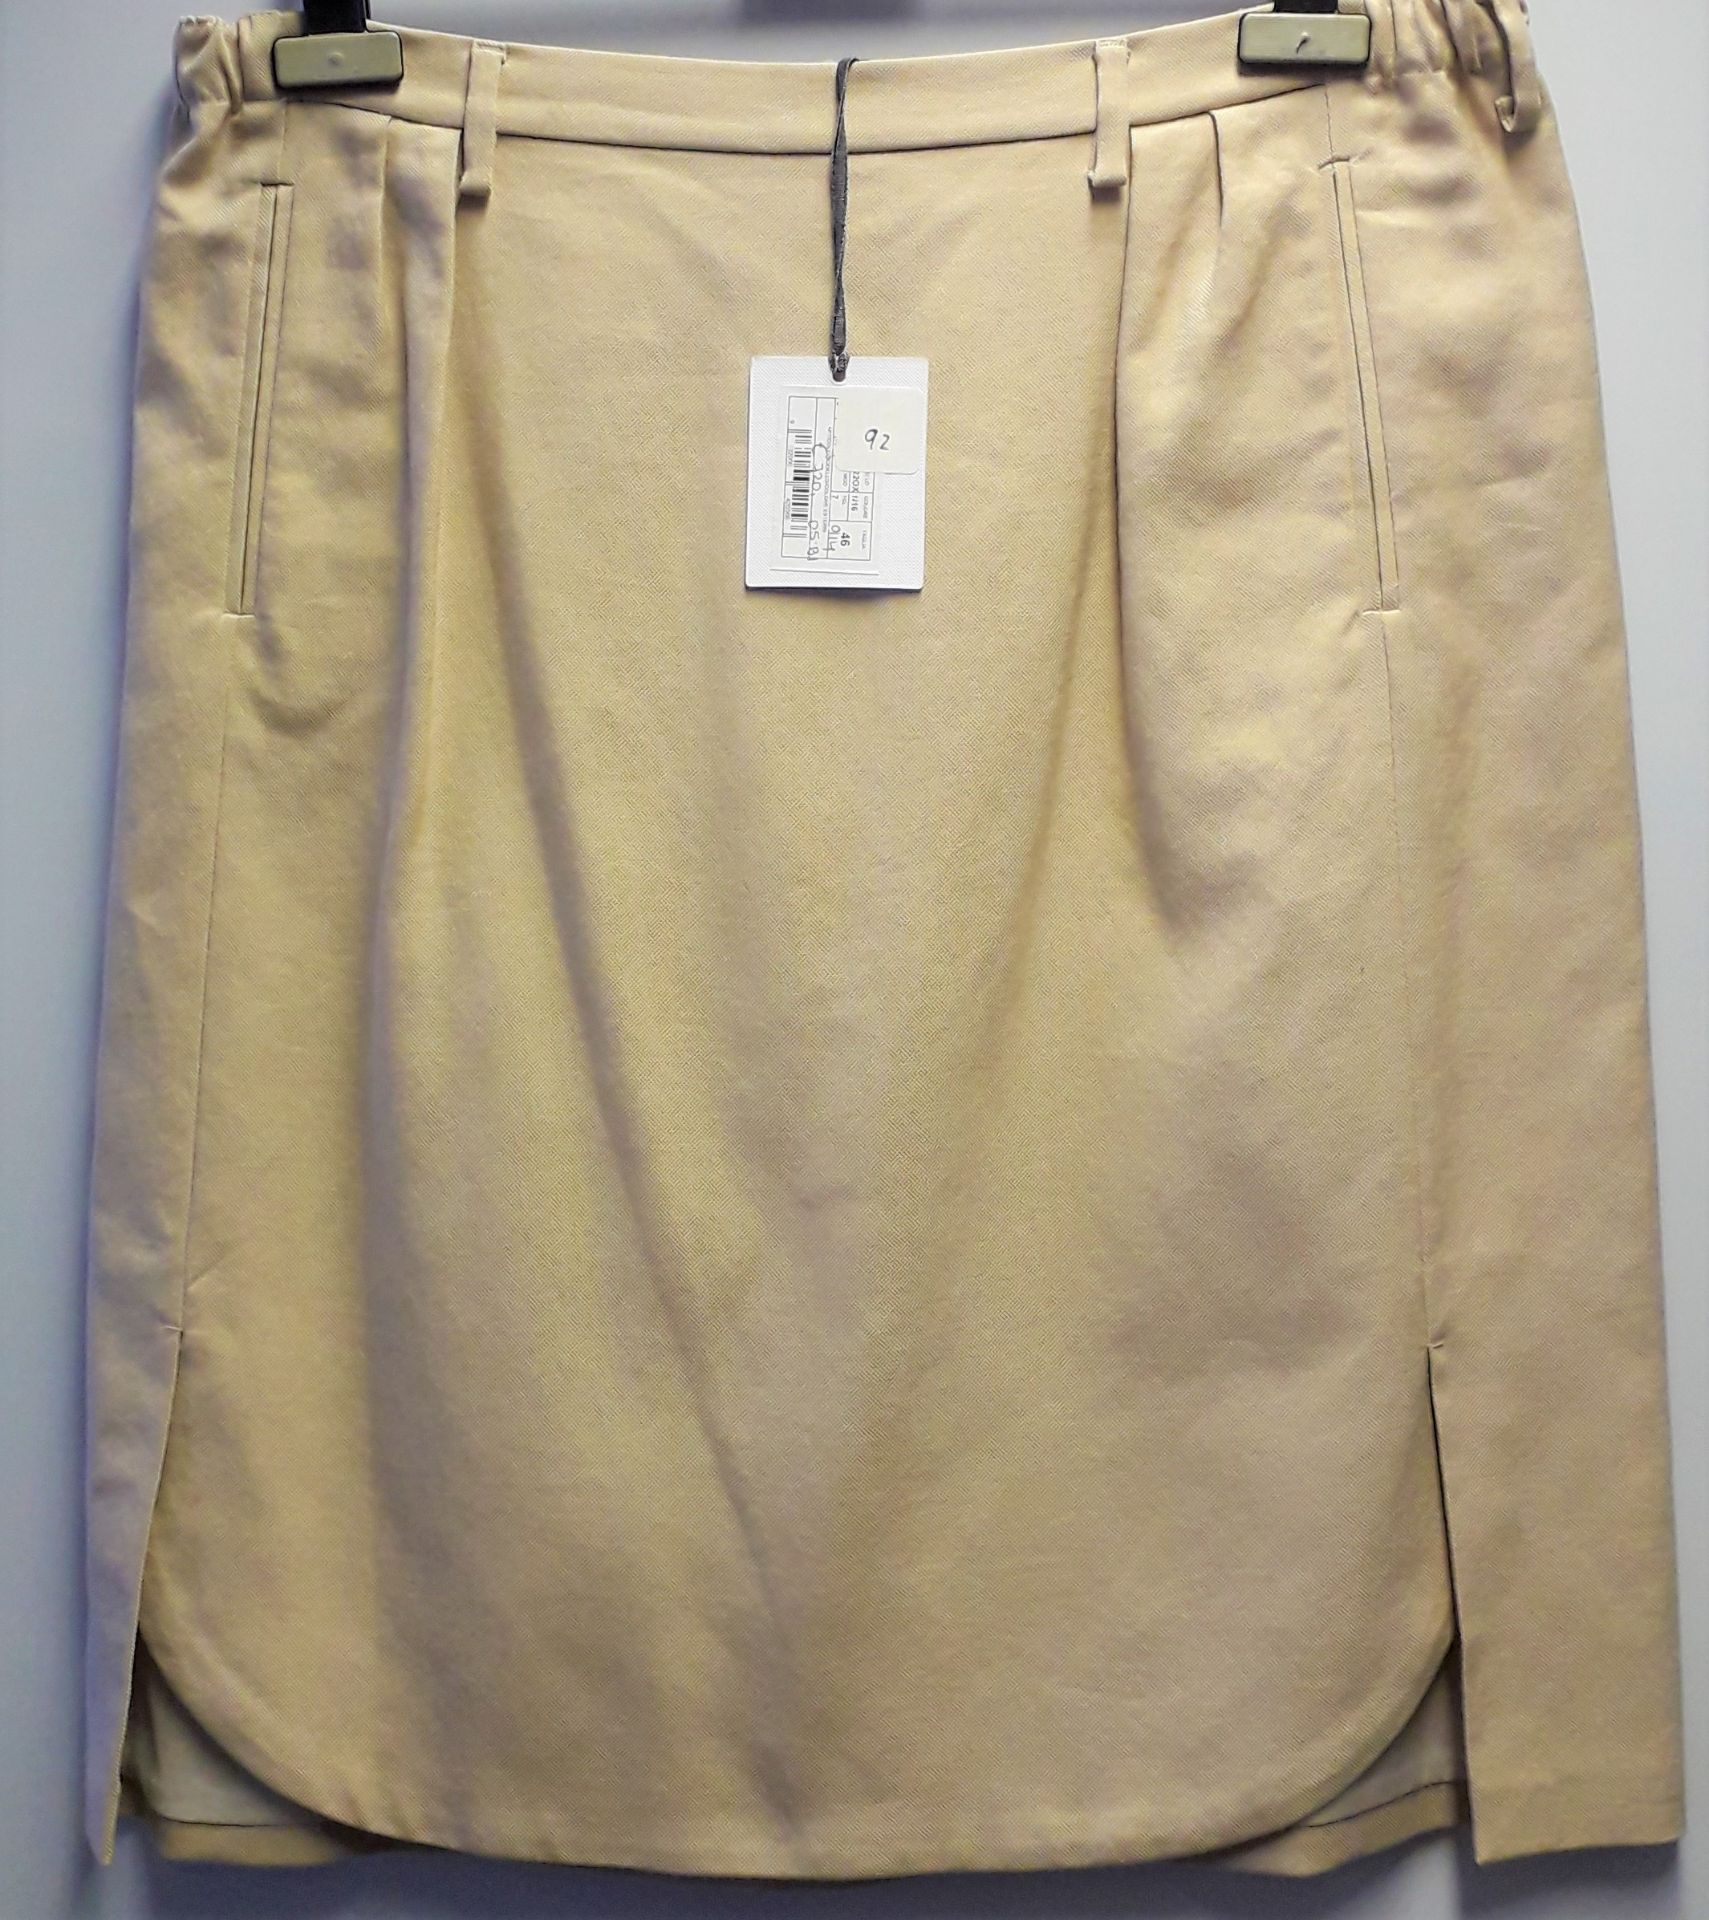 1 x Agnona Sand Curved Hem Skirt - Size: 18 - Material: 97% Cotton, 2% Nylon, 1% Elastane - From a